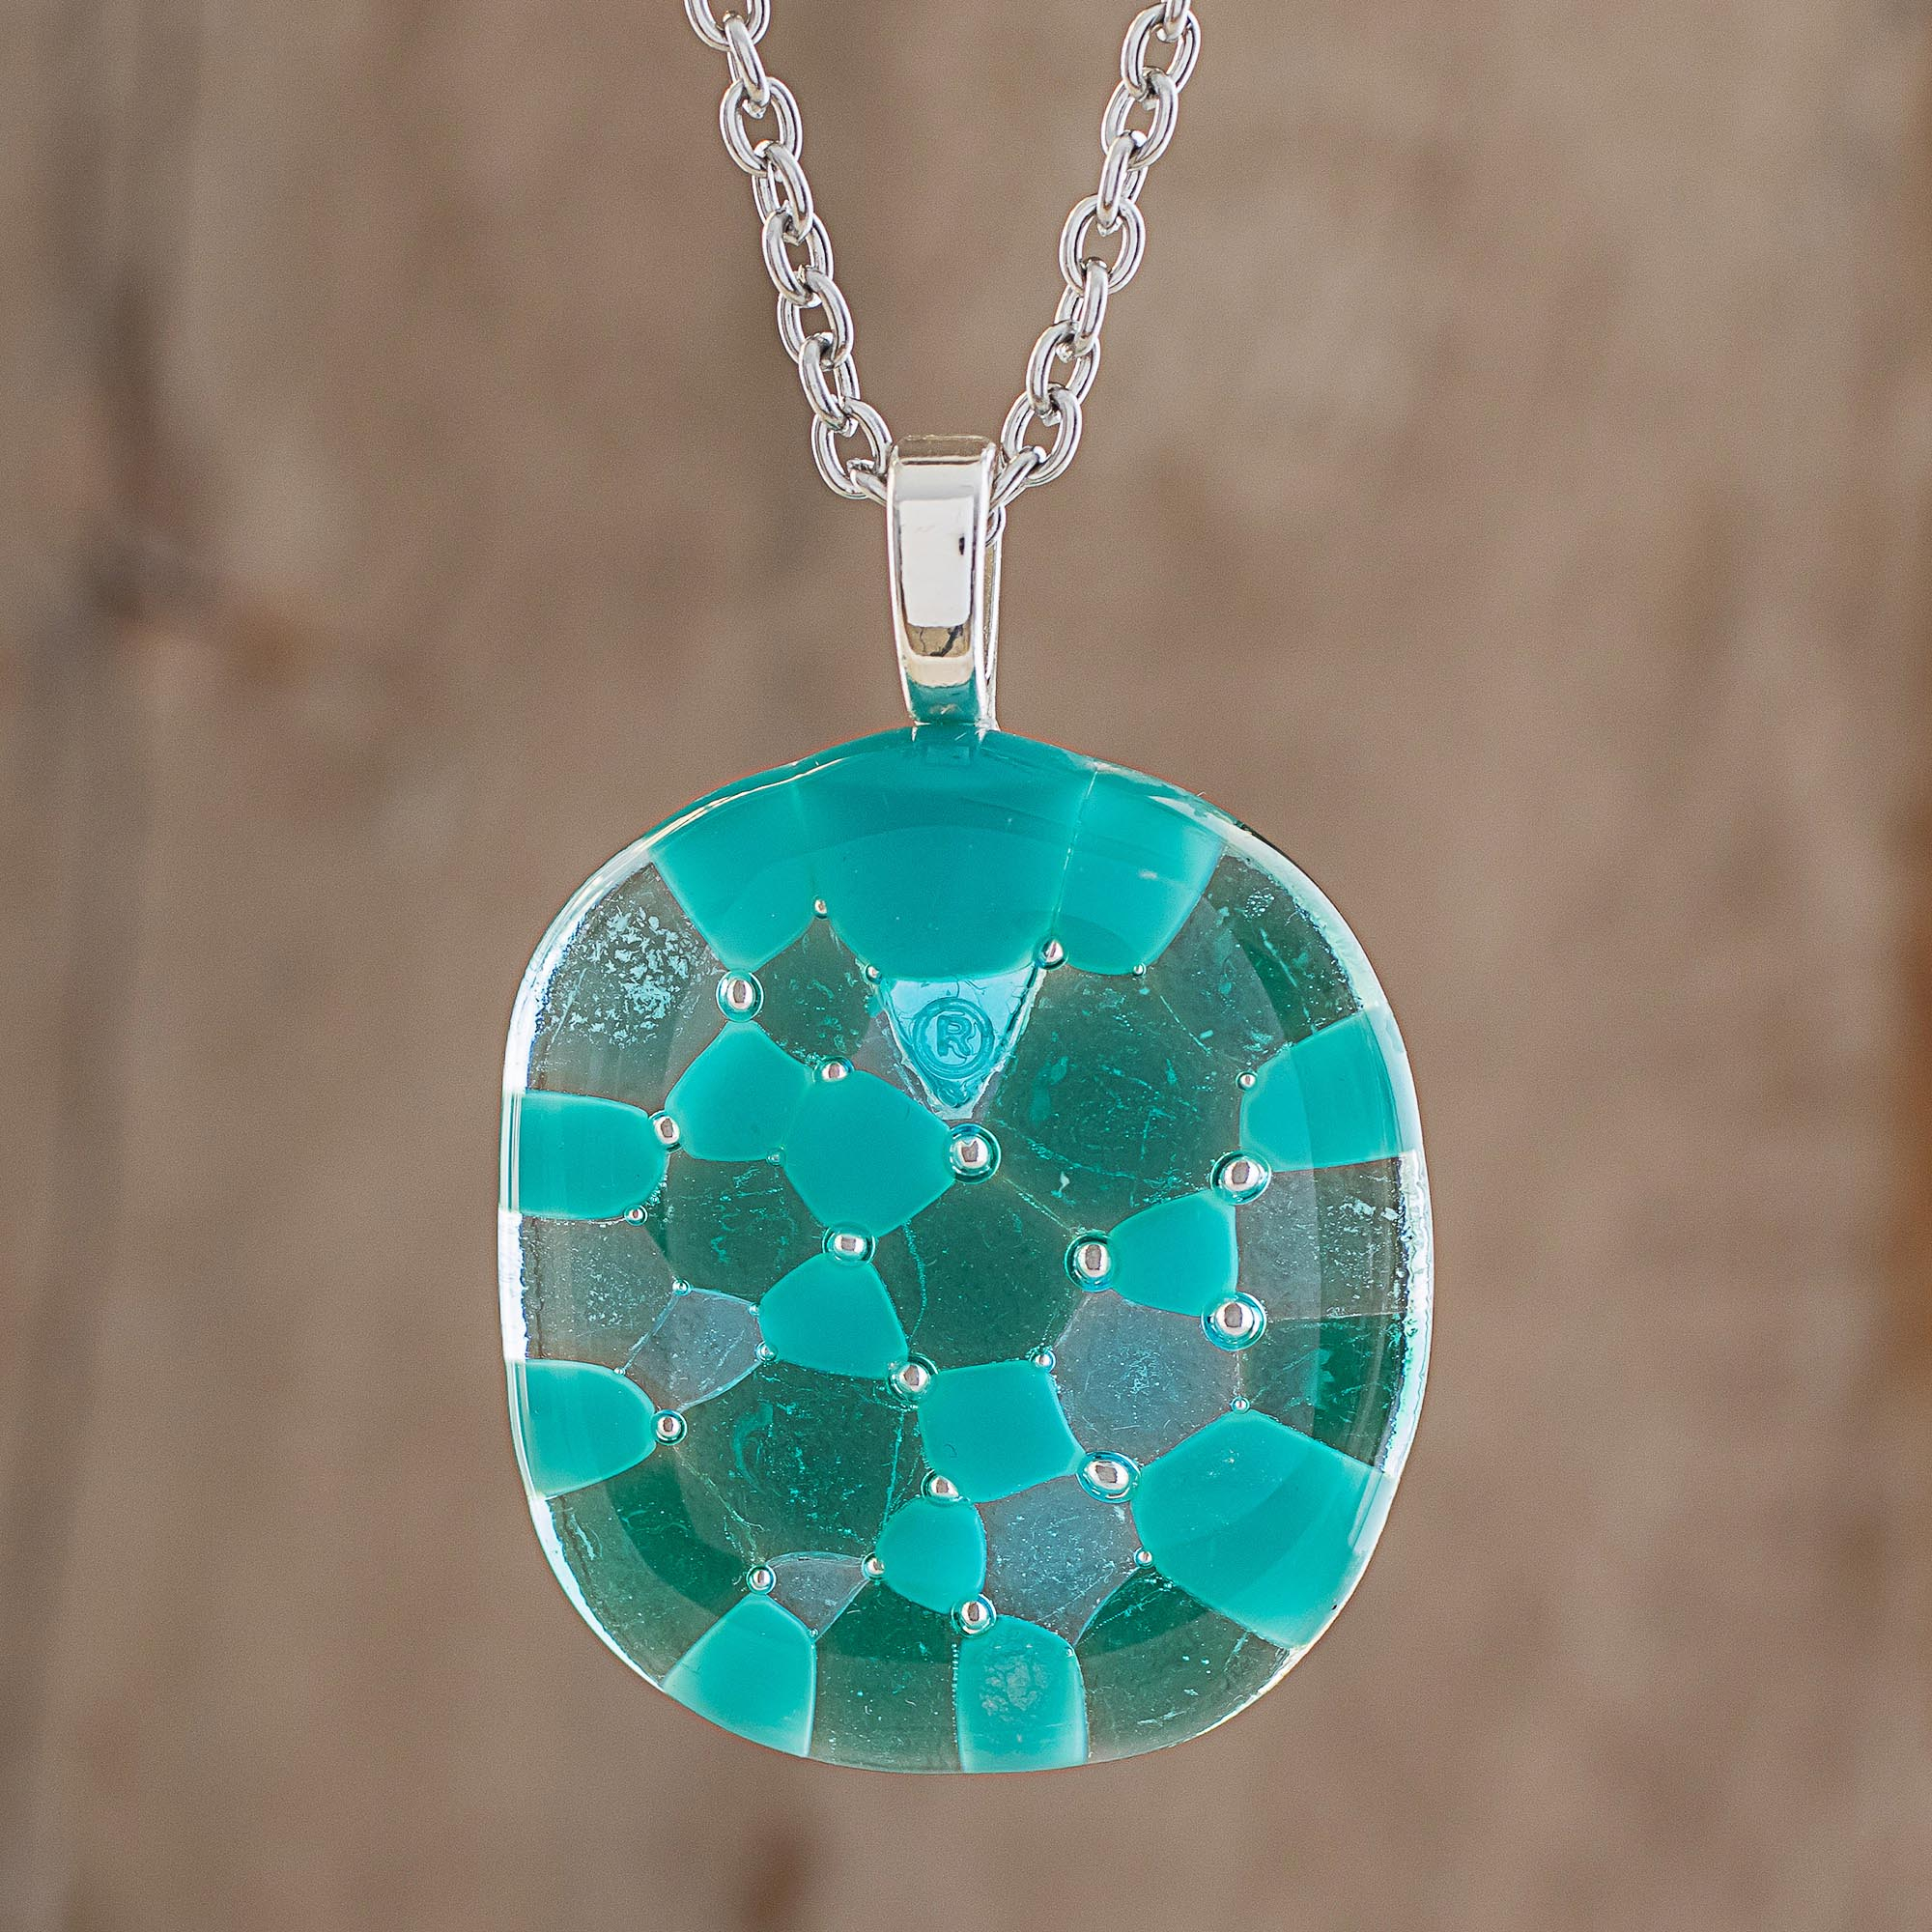 Glass pendant necklace